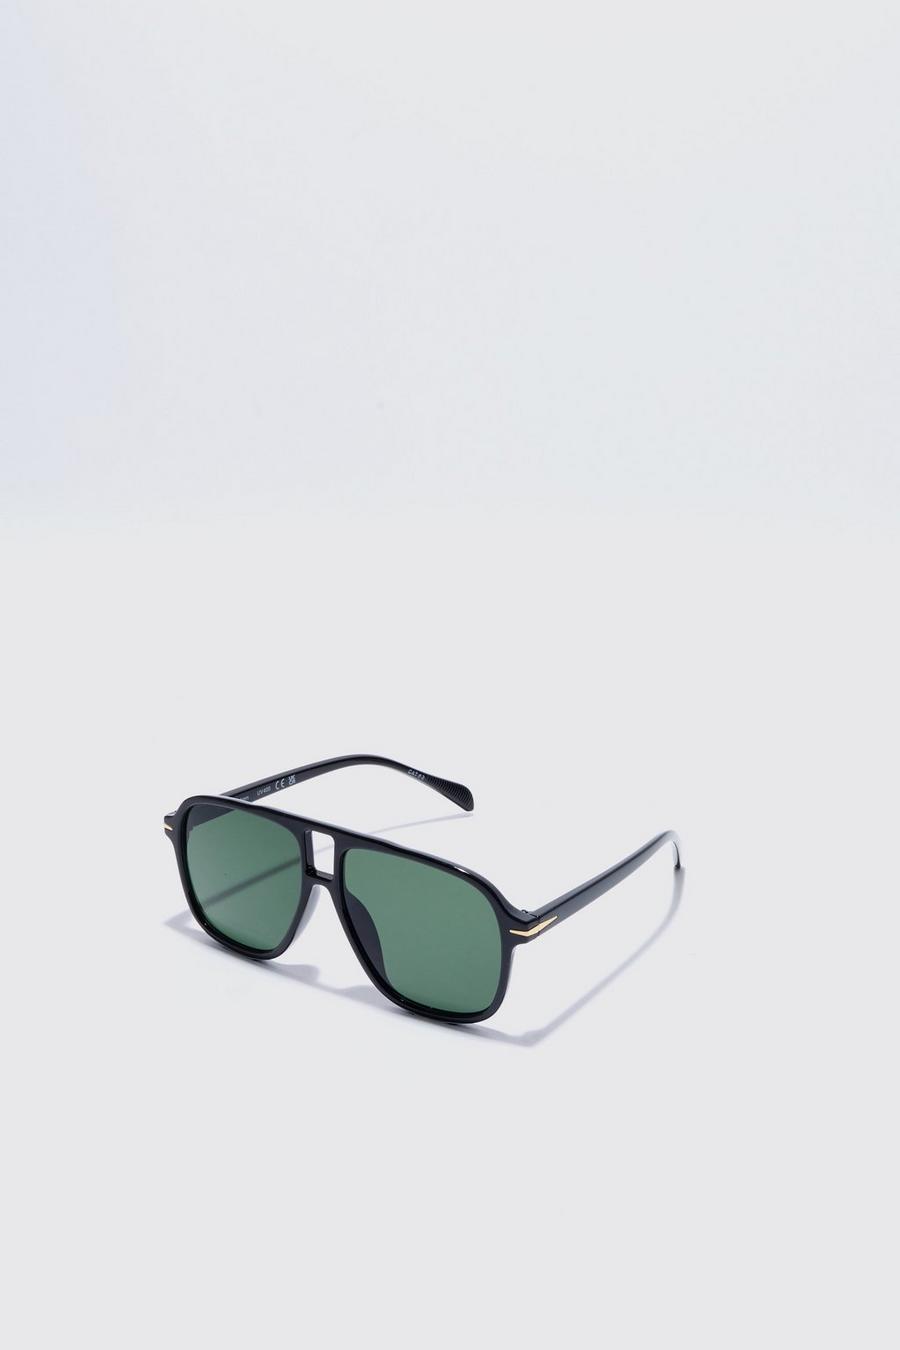 Black Tort Plastic Sunglasses with Smoke Lense